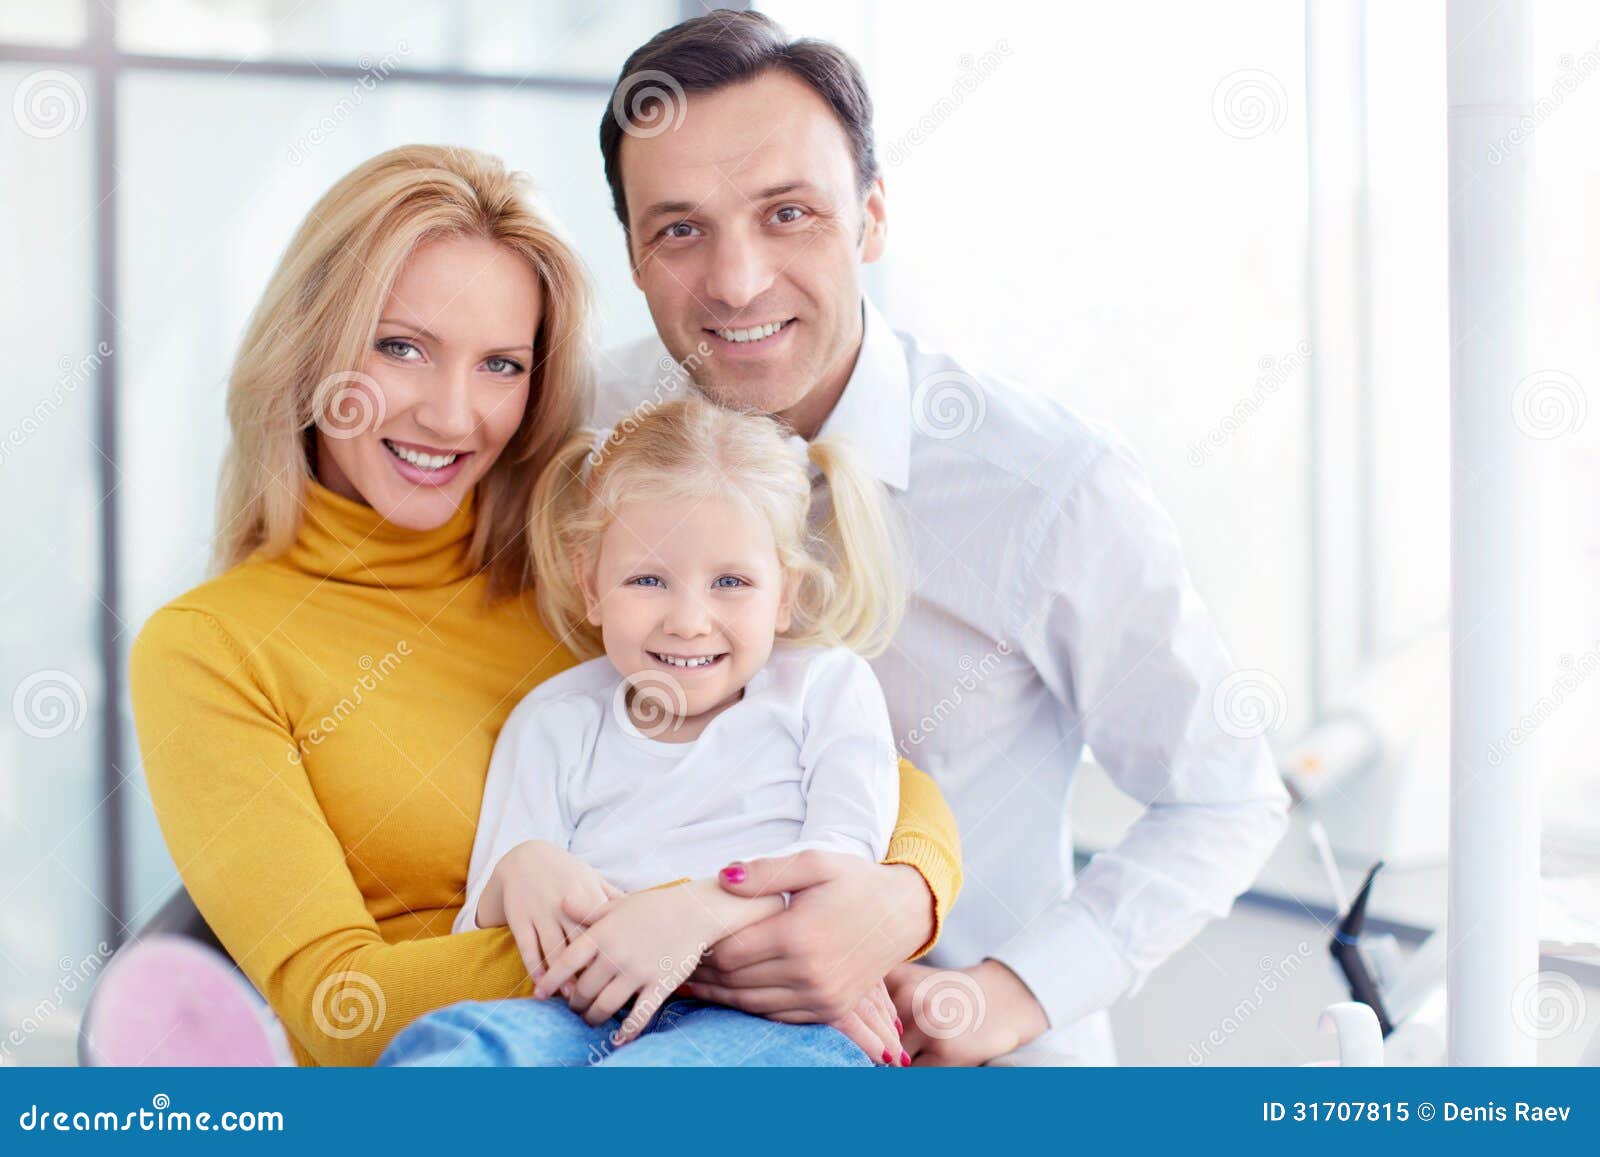 family in dental clinic